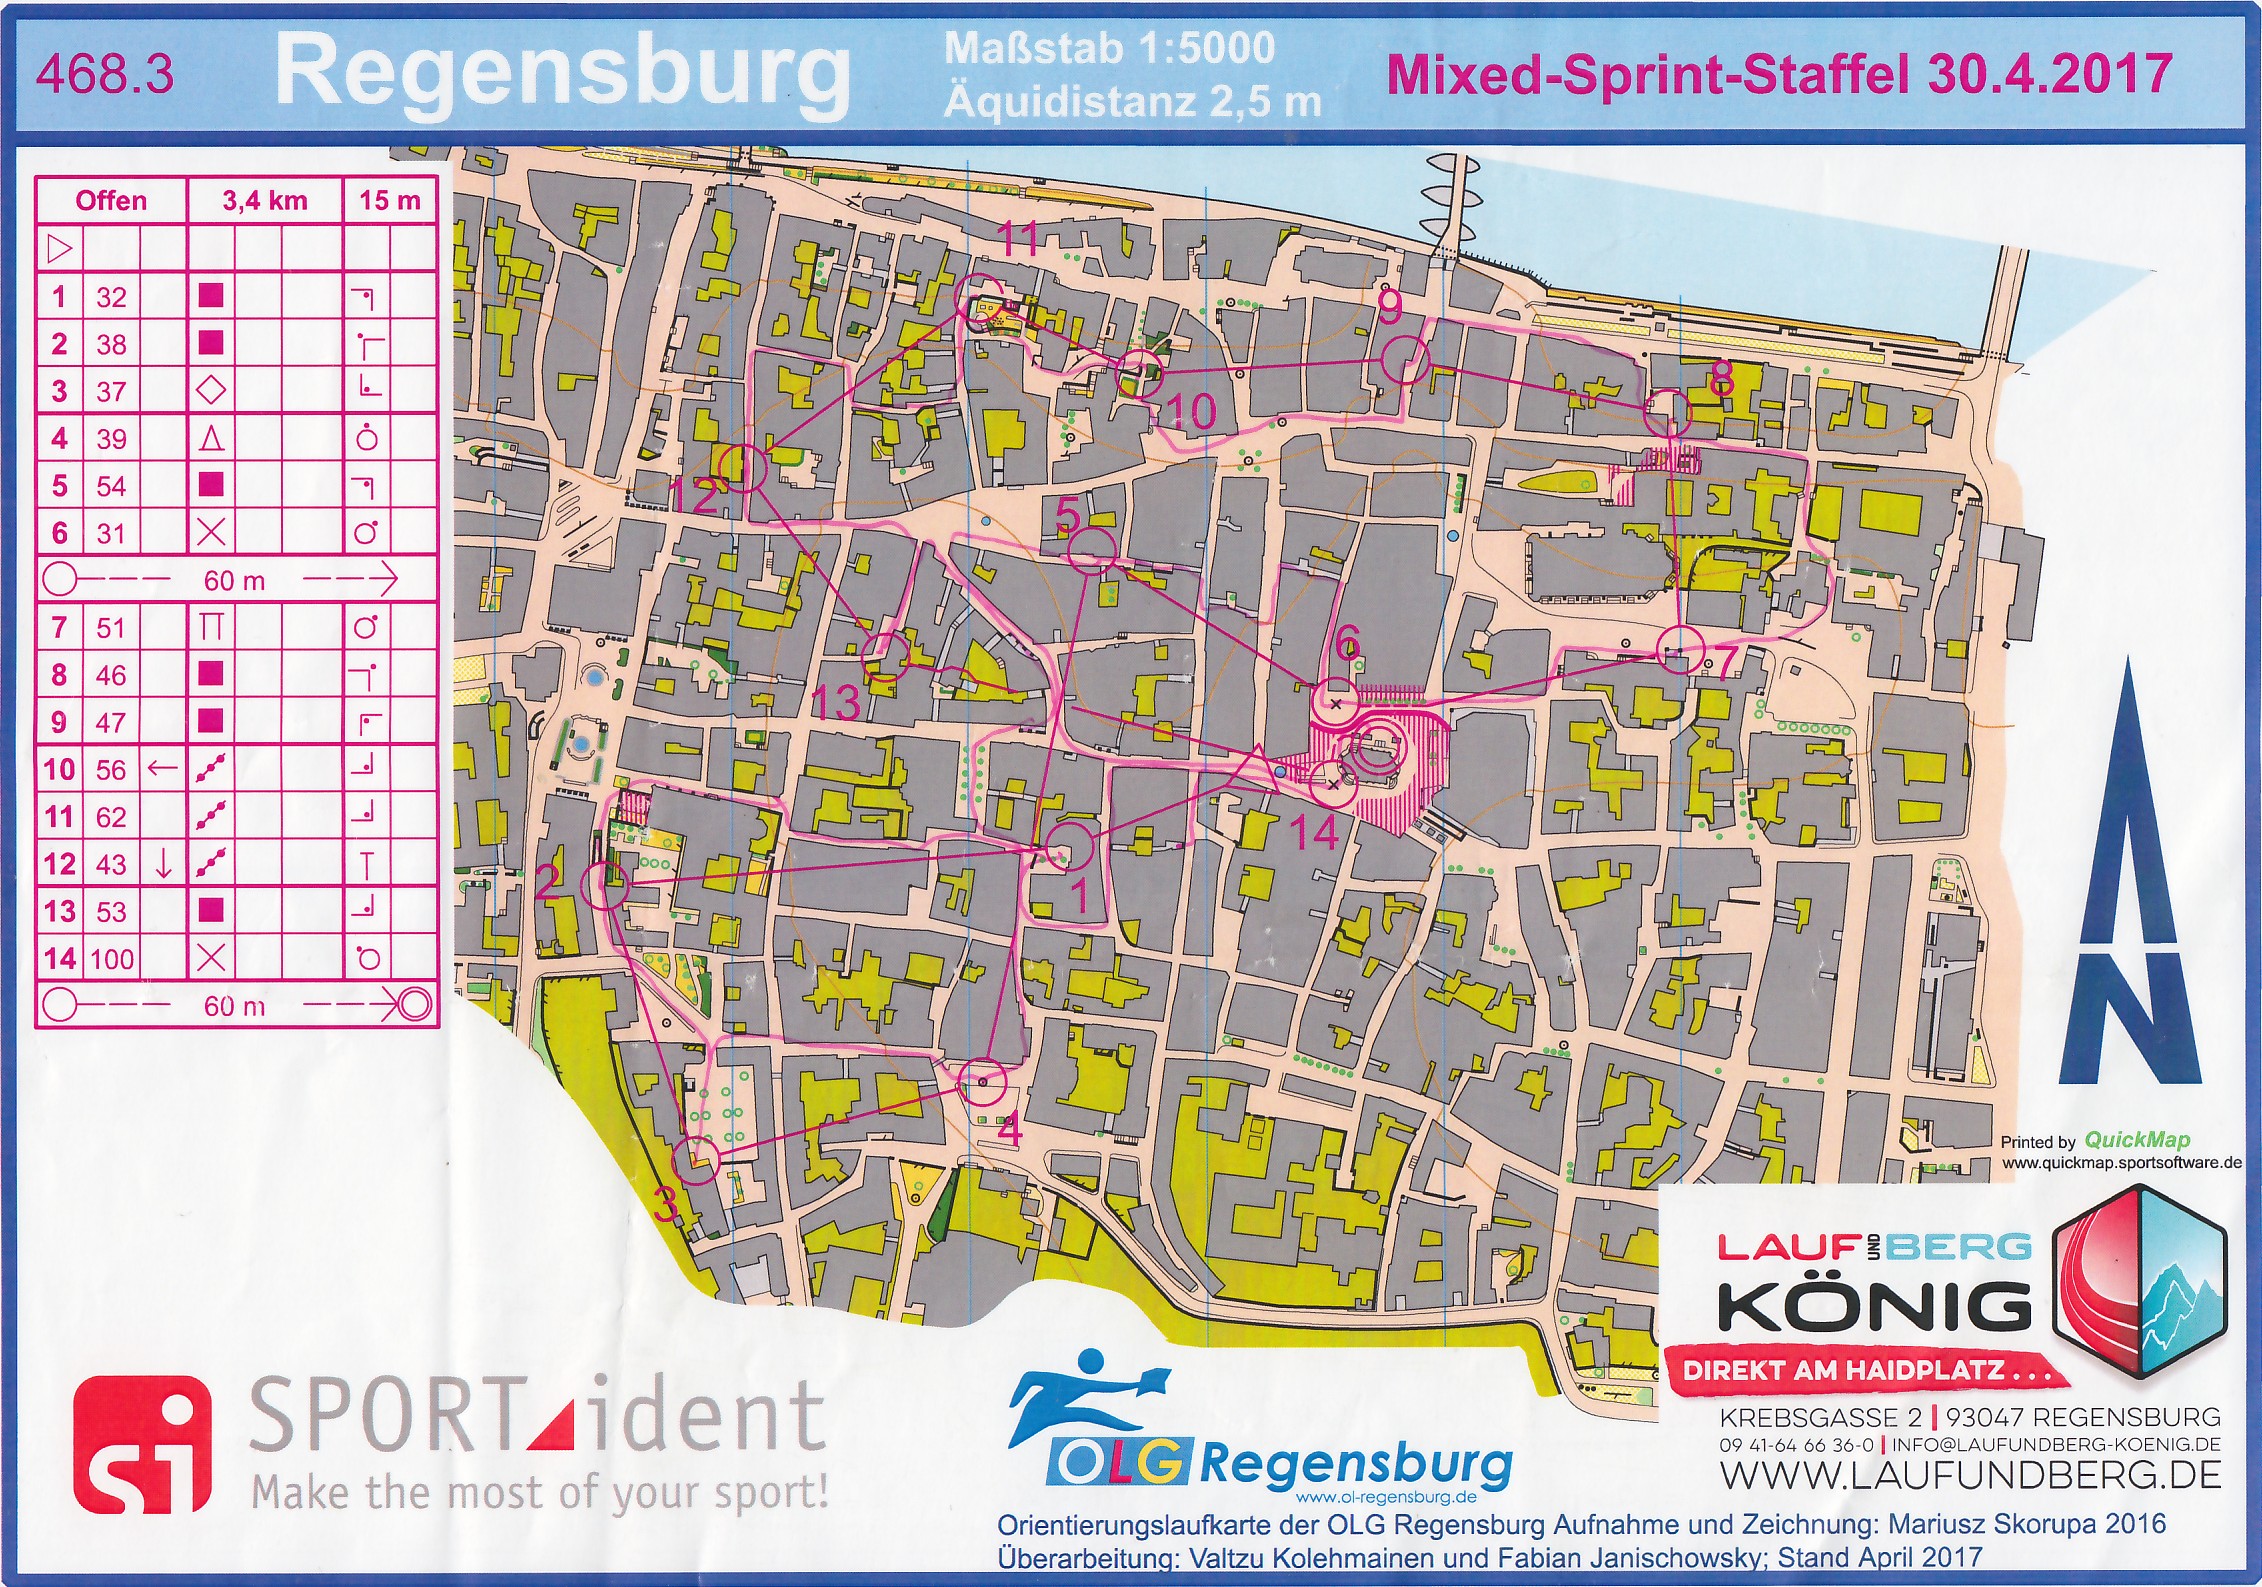 Sprint-Staffel in Regensburg (2017-04-30)